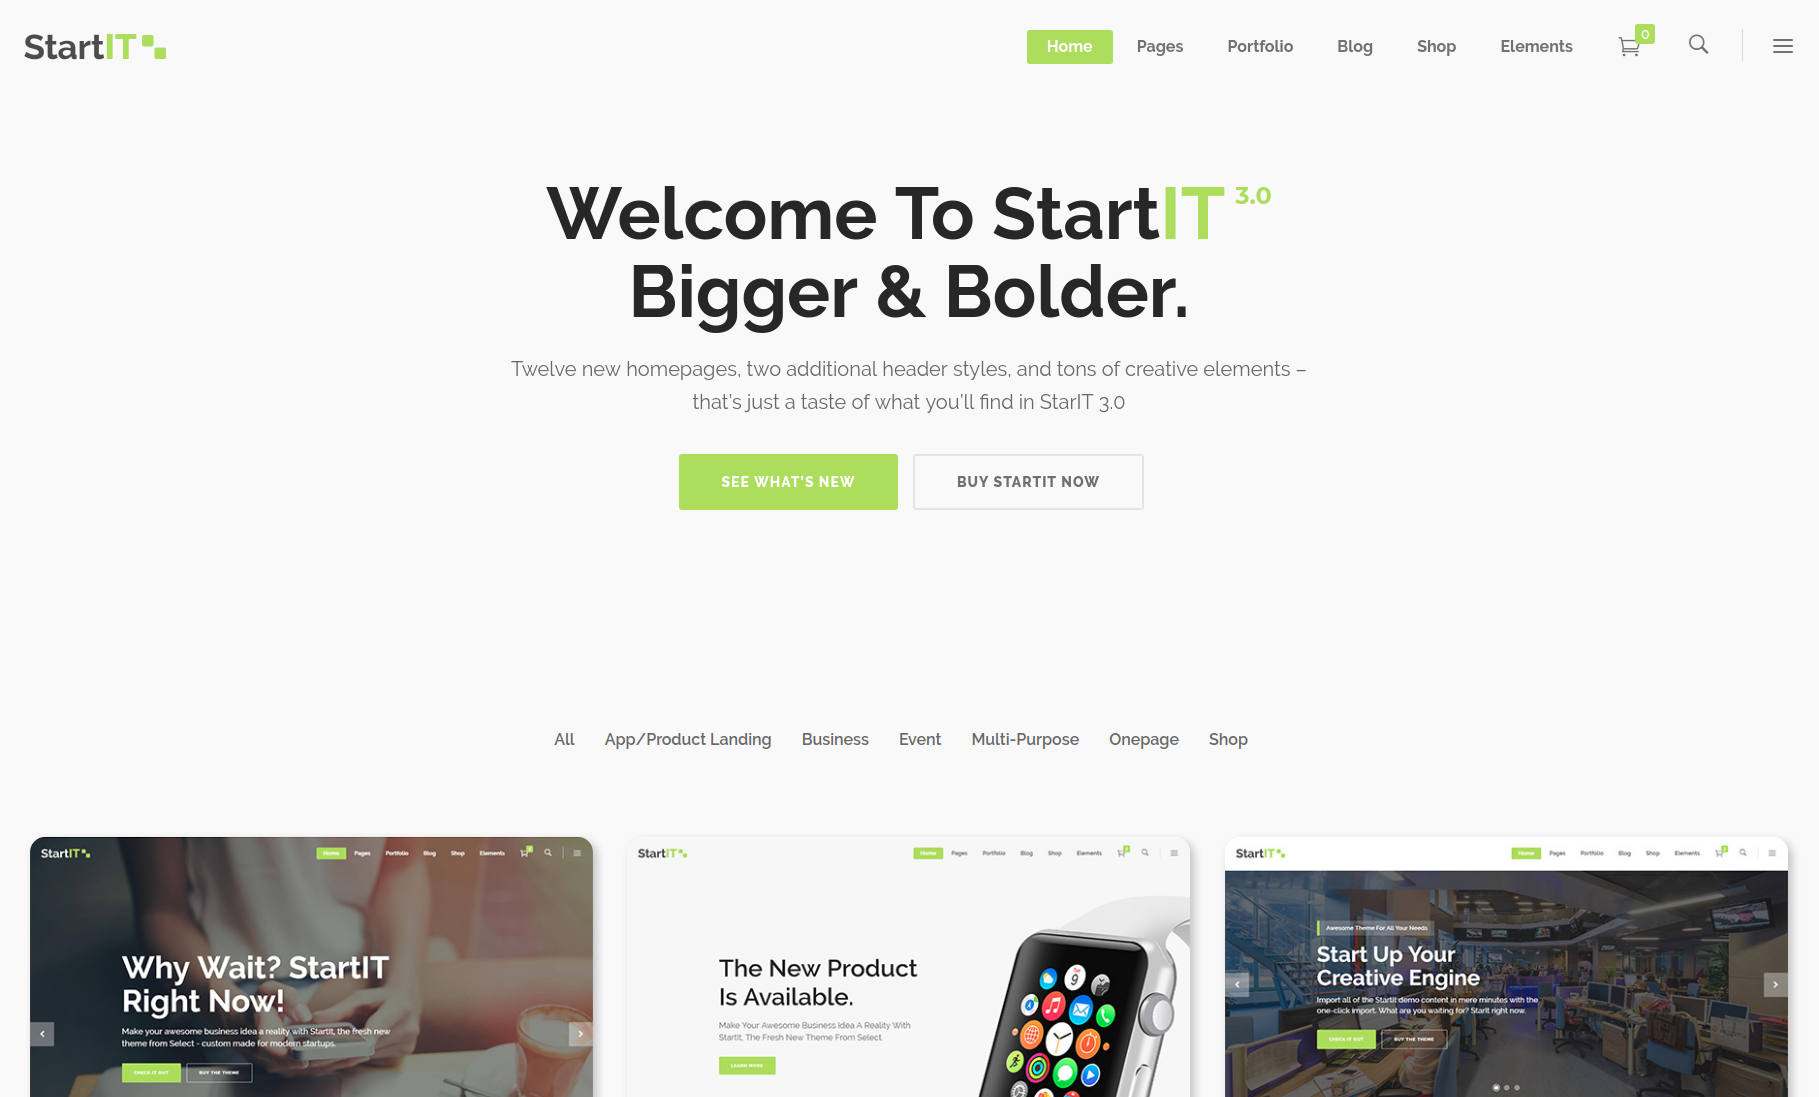 WordPress StartIt theme - A fresh business startup theme